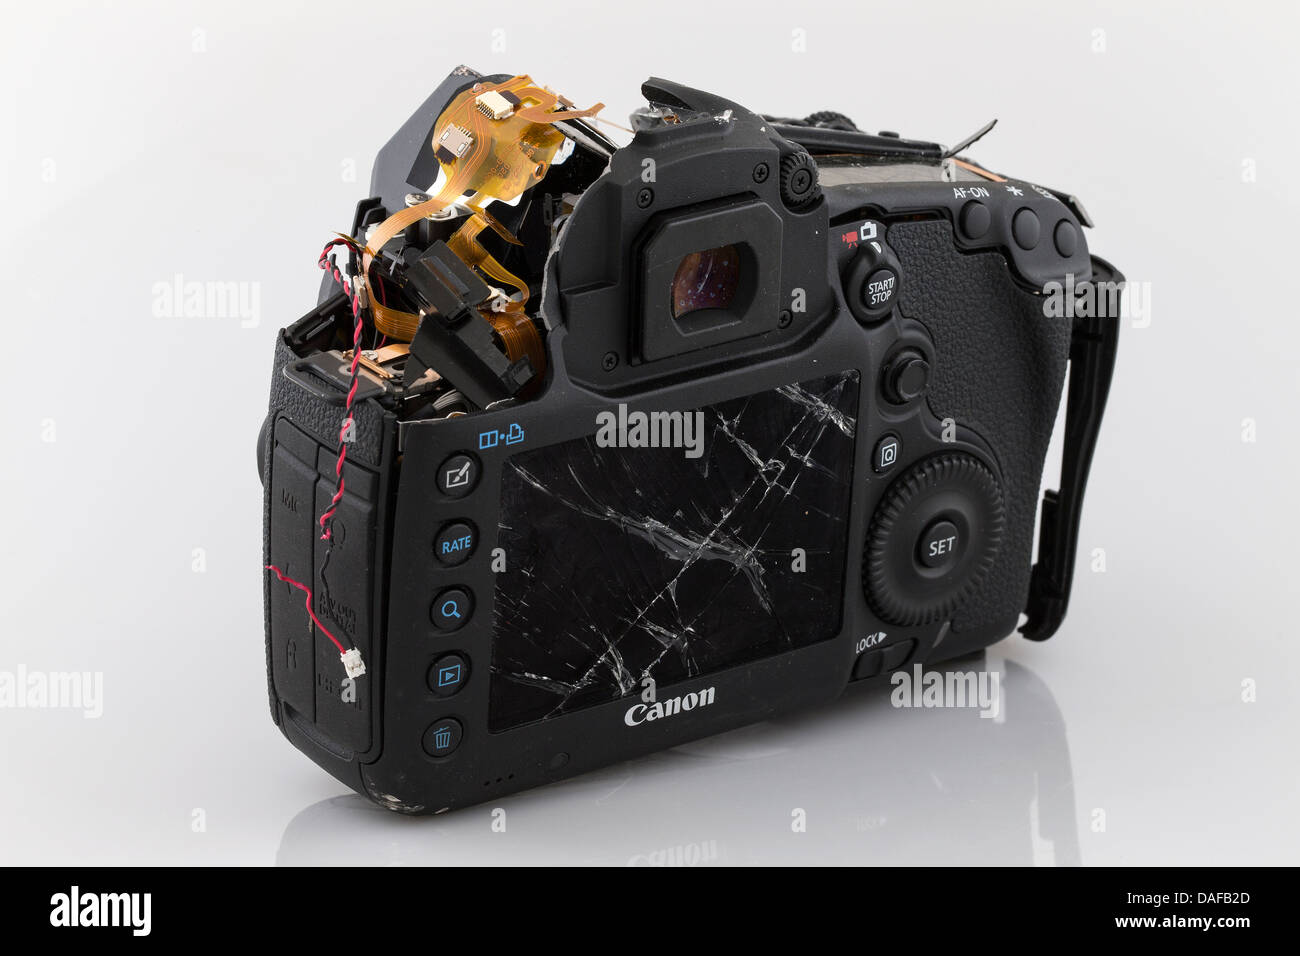 Kamera, Canon 5D gebrochen MkIII, zertrümmerten Kamera, Stücke aus einer Kamera, Canon 5D Mkiii. Kamera in Stücken Stockfoto